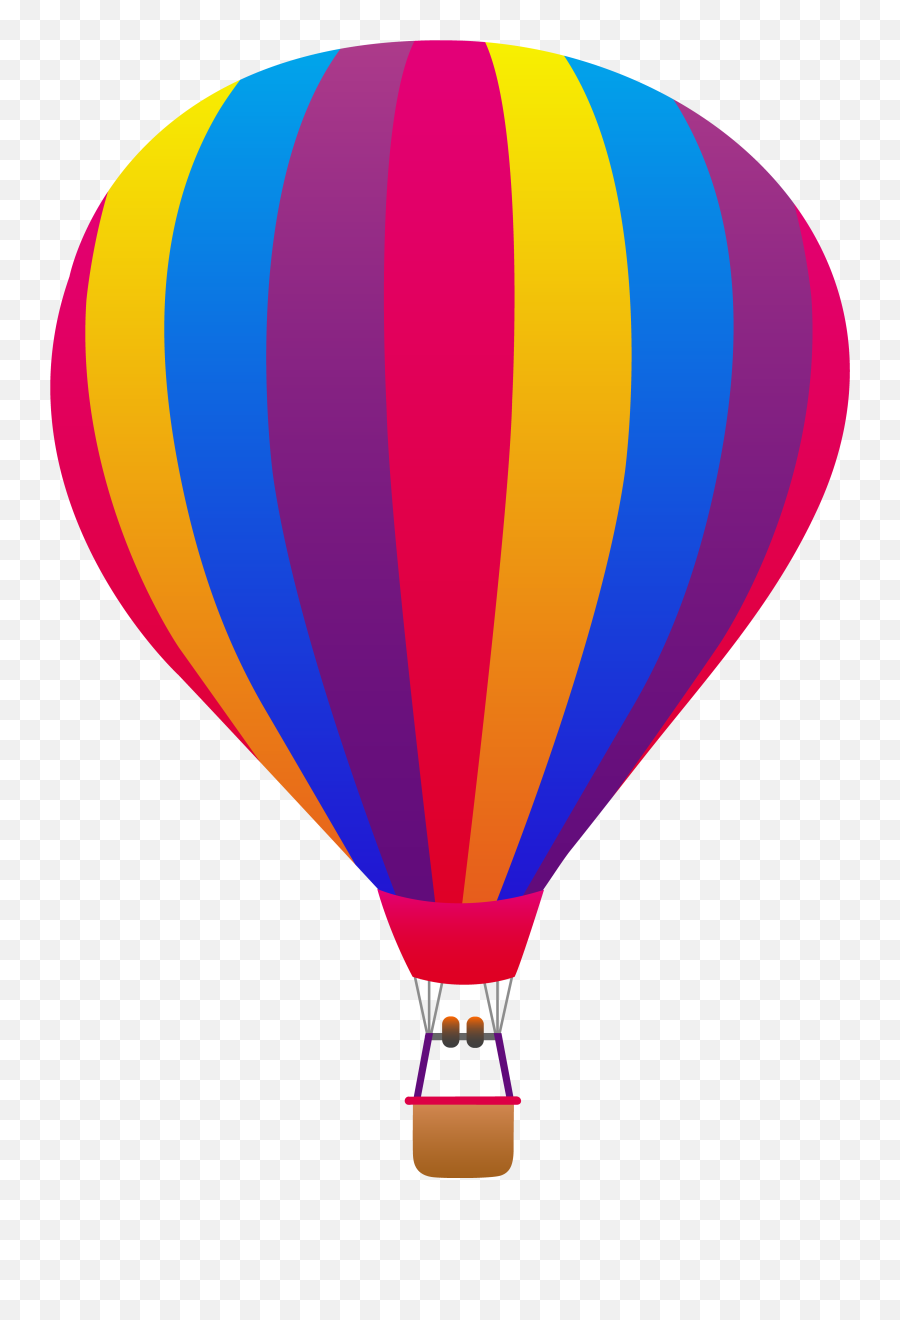 Free Balloon Images Free Download Free Balloon Images Free Emoji,Cute Emoticon Balloon Labtop